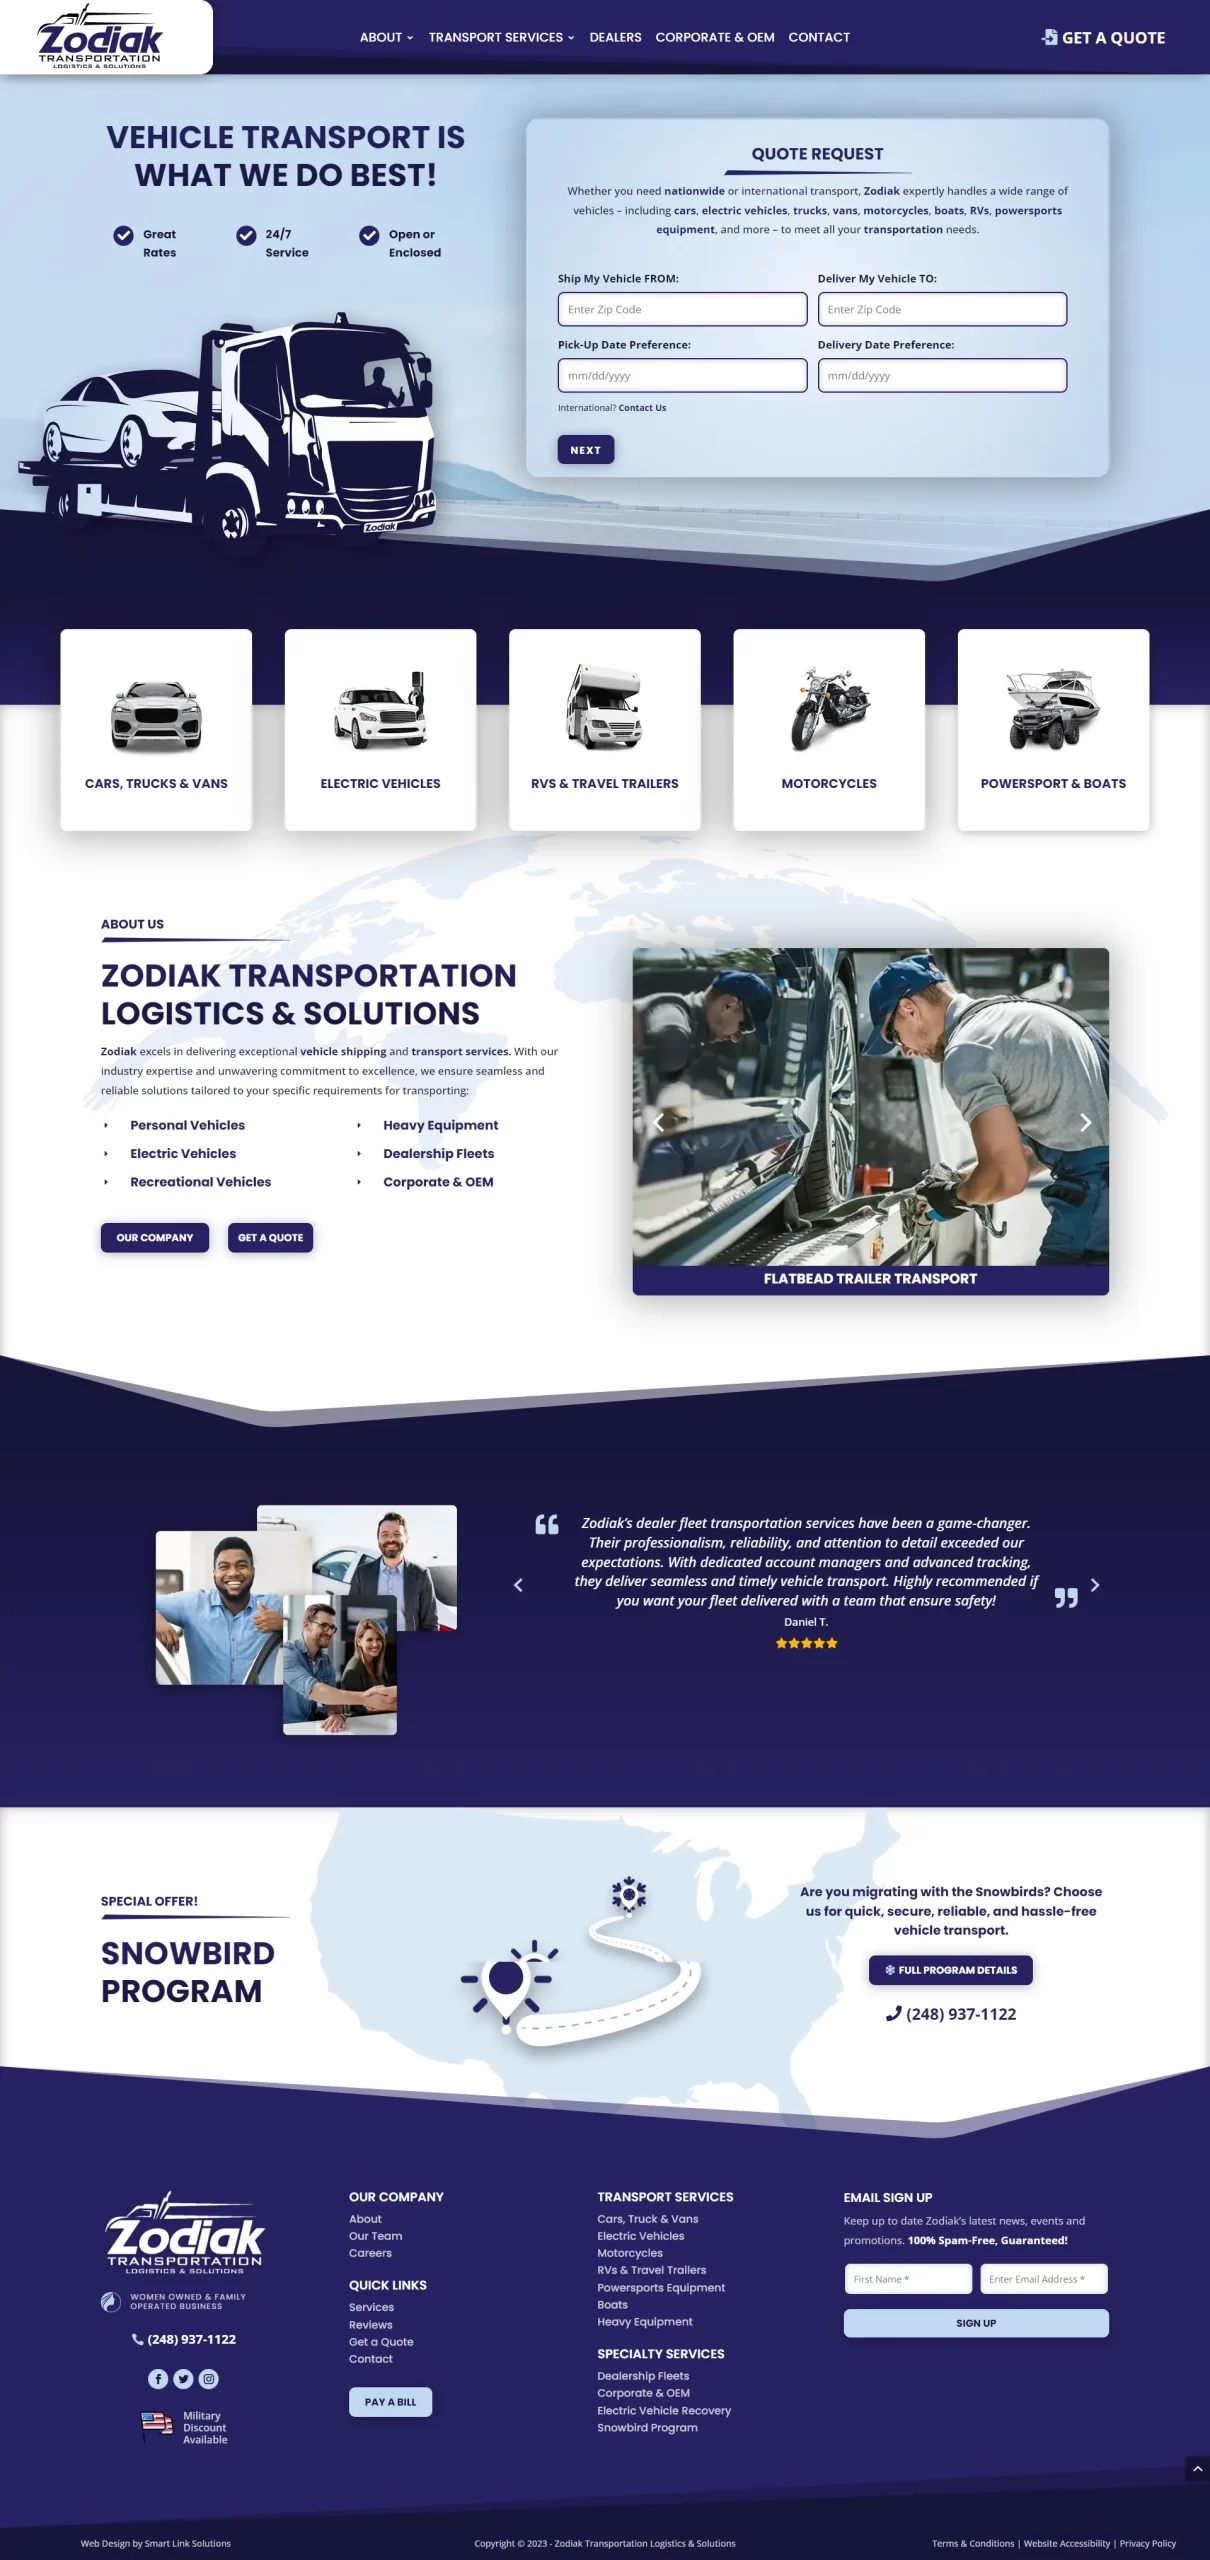 Zodiak Transportation Logistics and Solutions